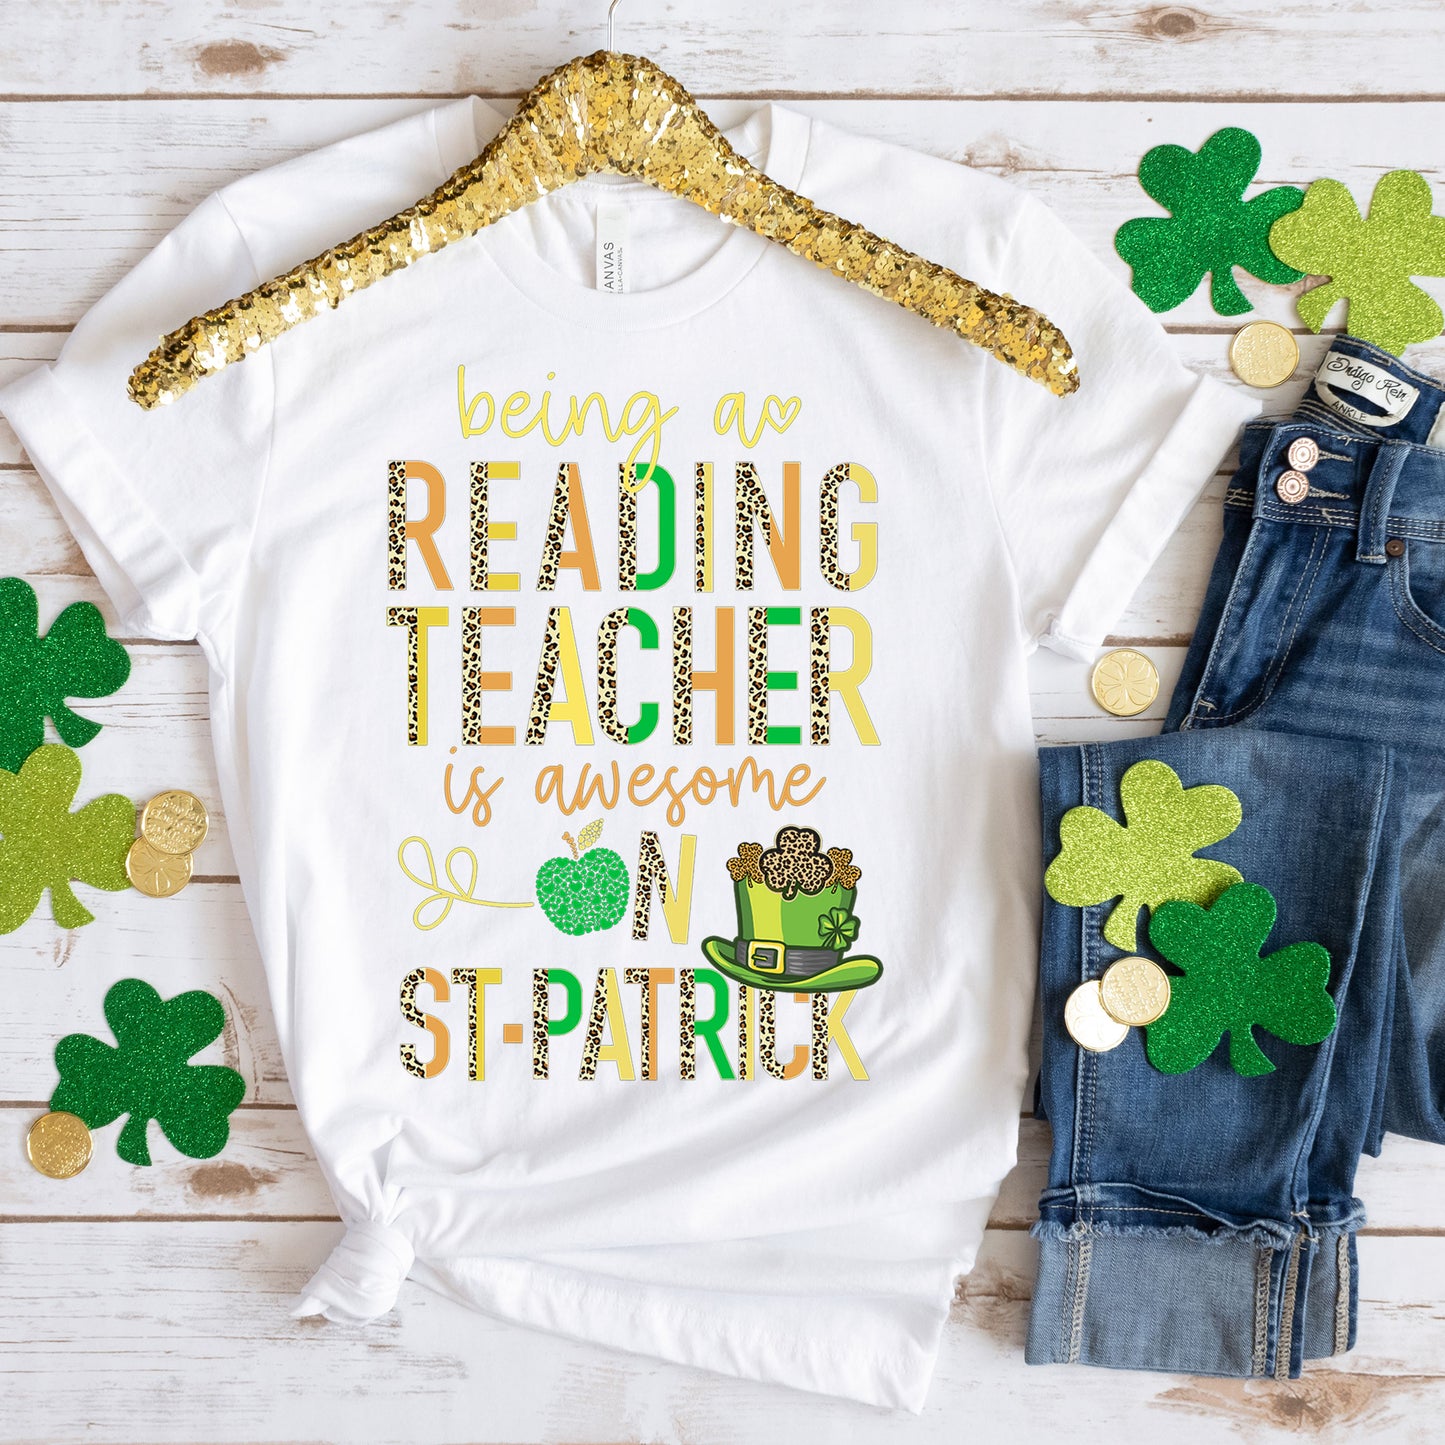 Teaching Reading Teacher St Patrick's Day T-Shirt